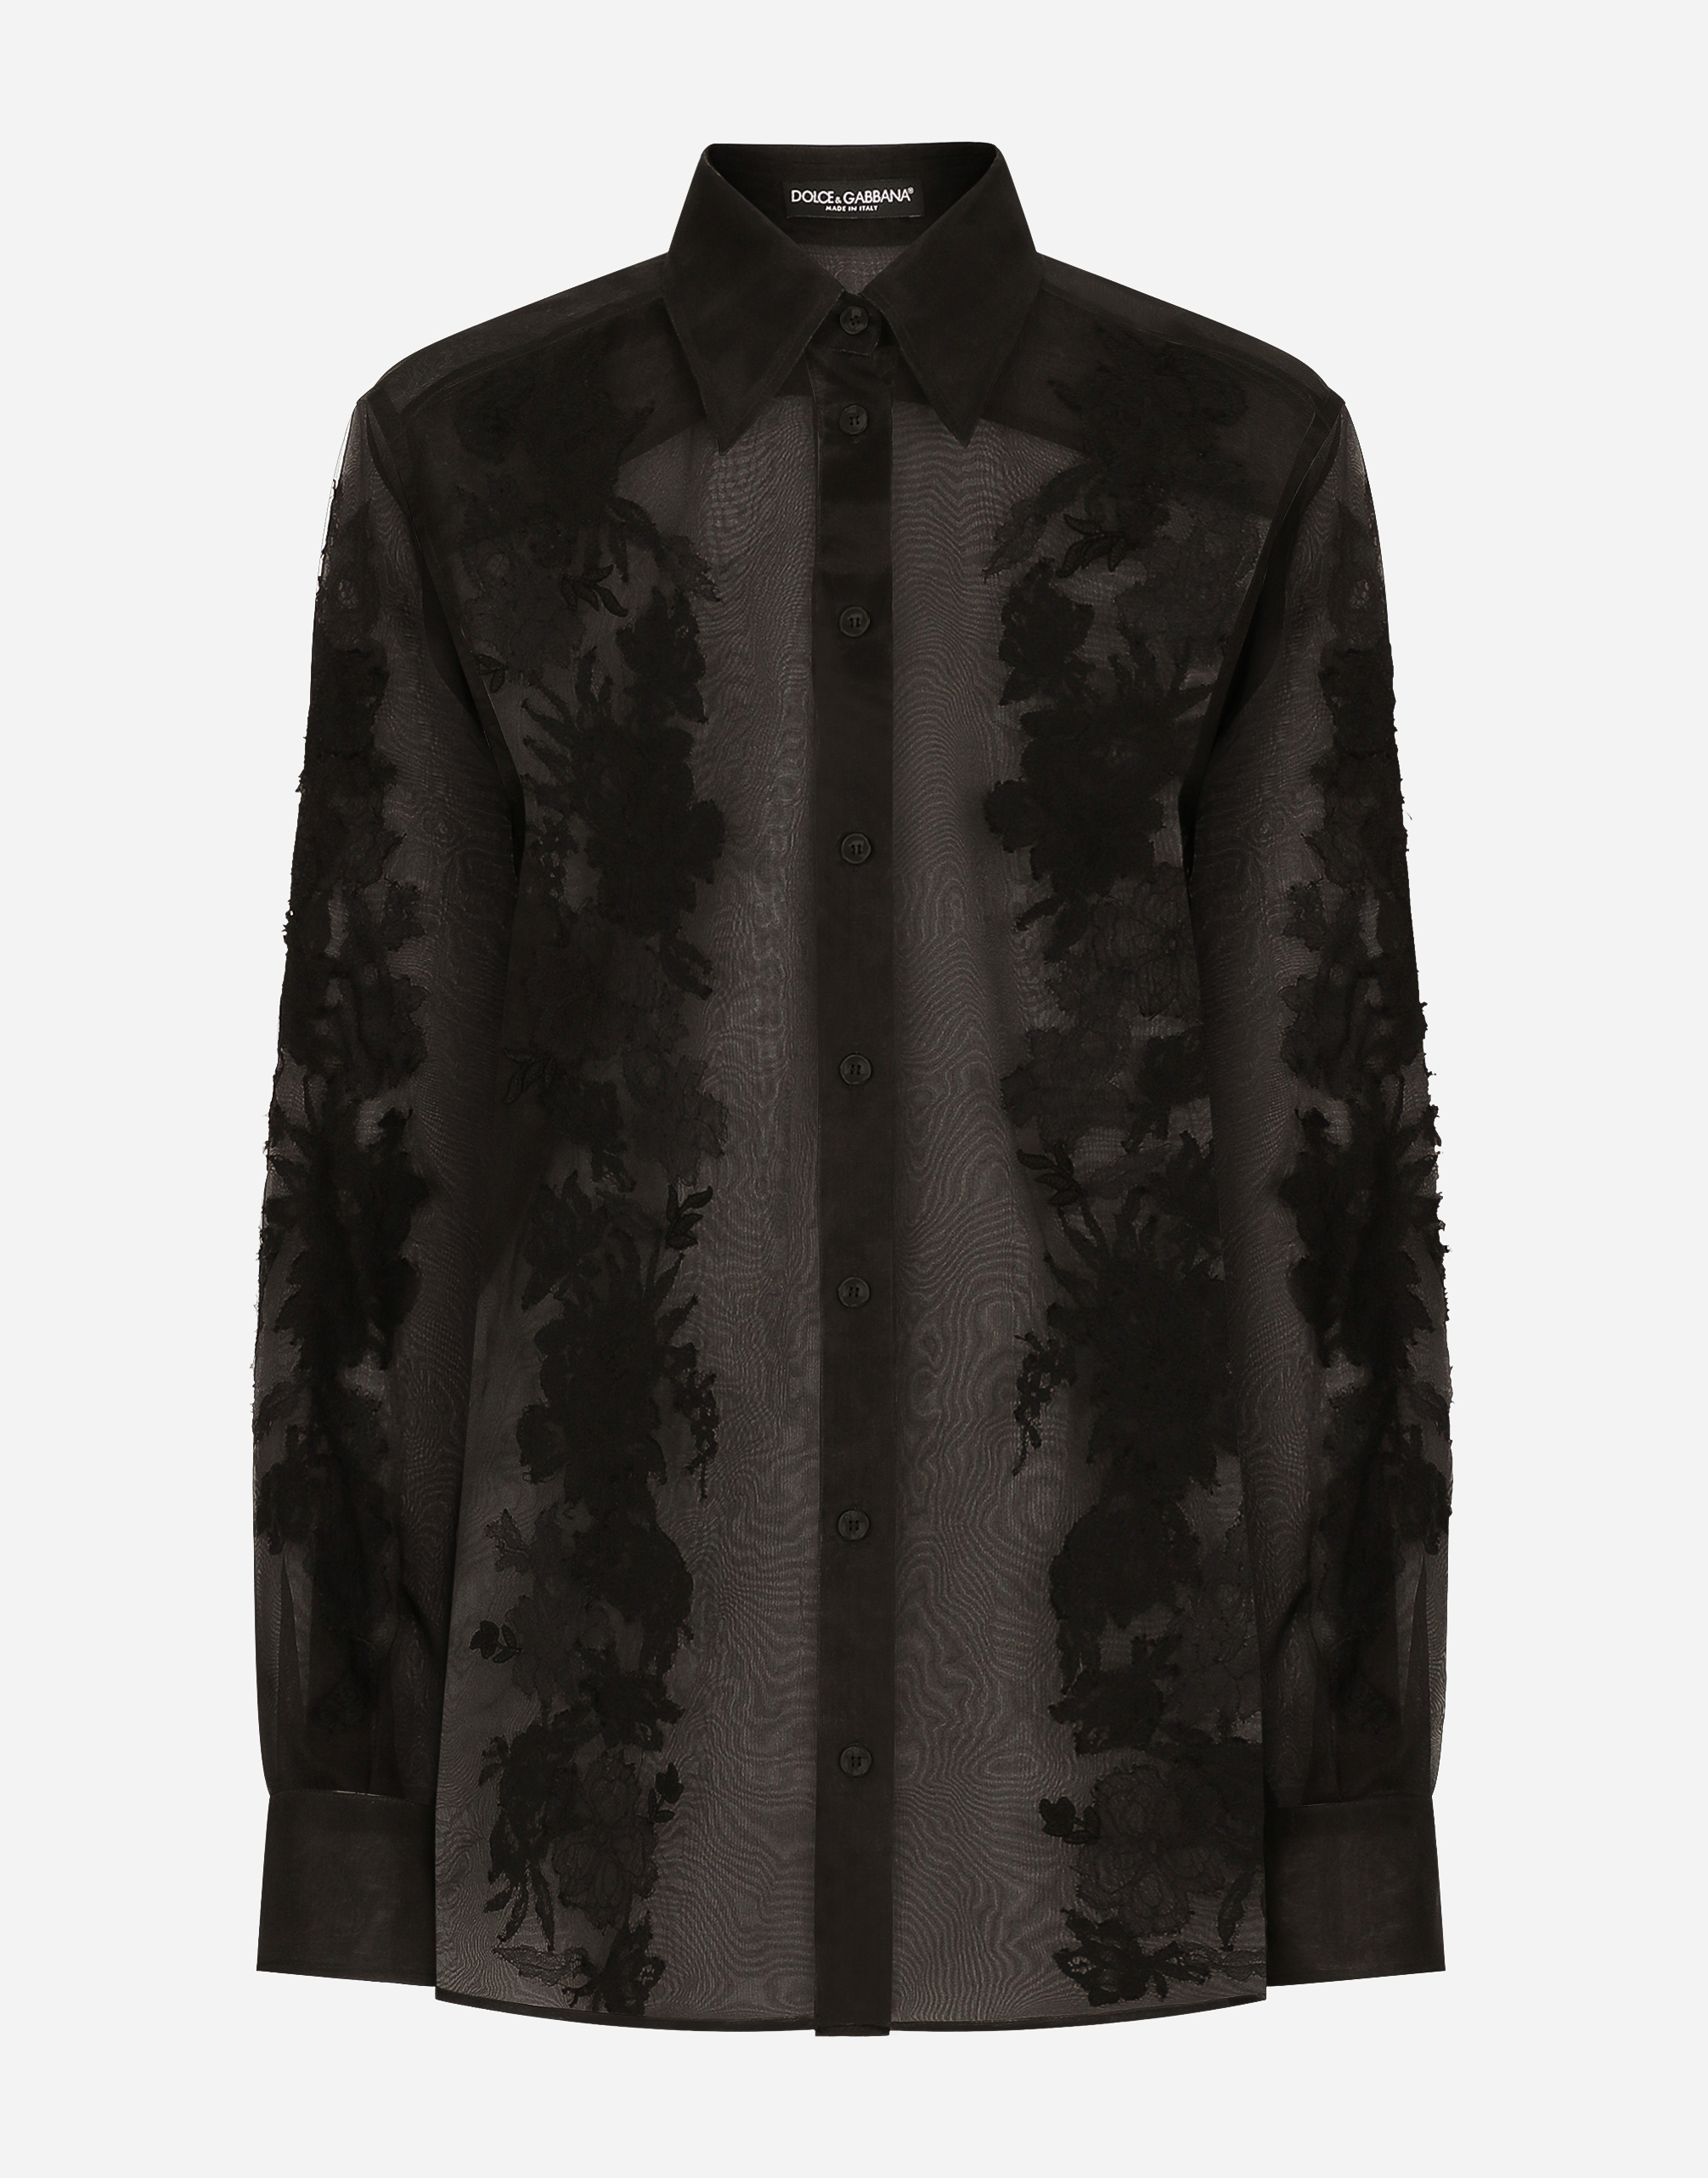 Dolce & Gabbana Organza Shirt With Lace Appliqués In Black